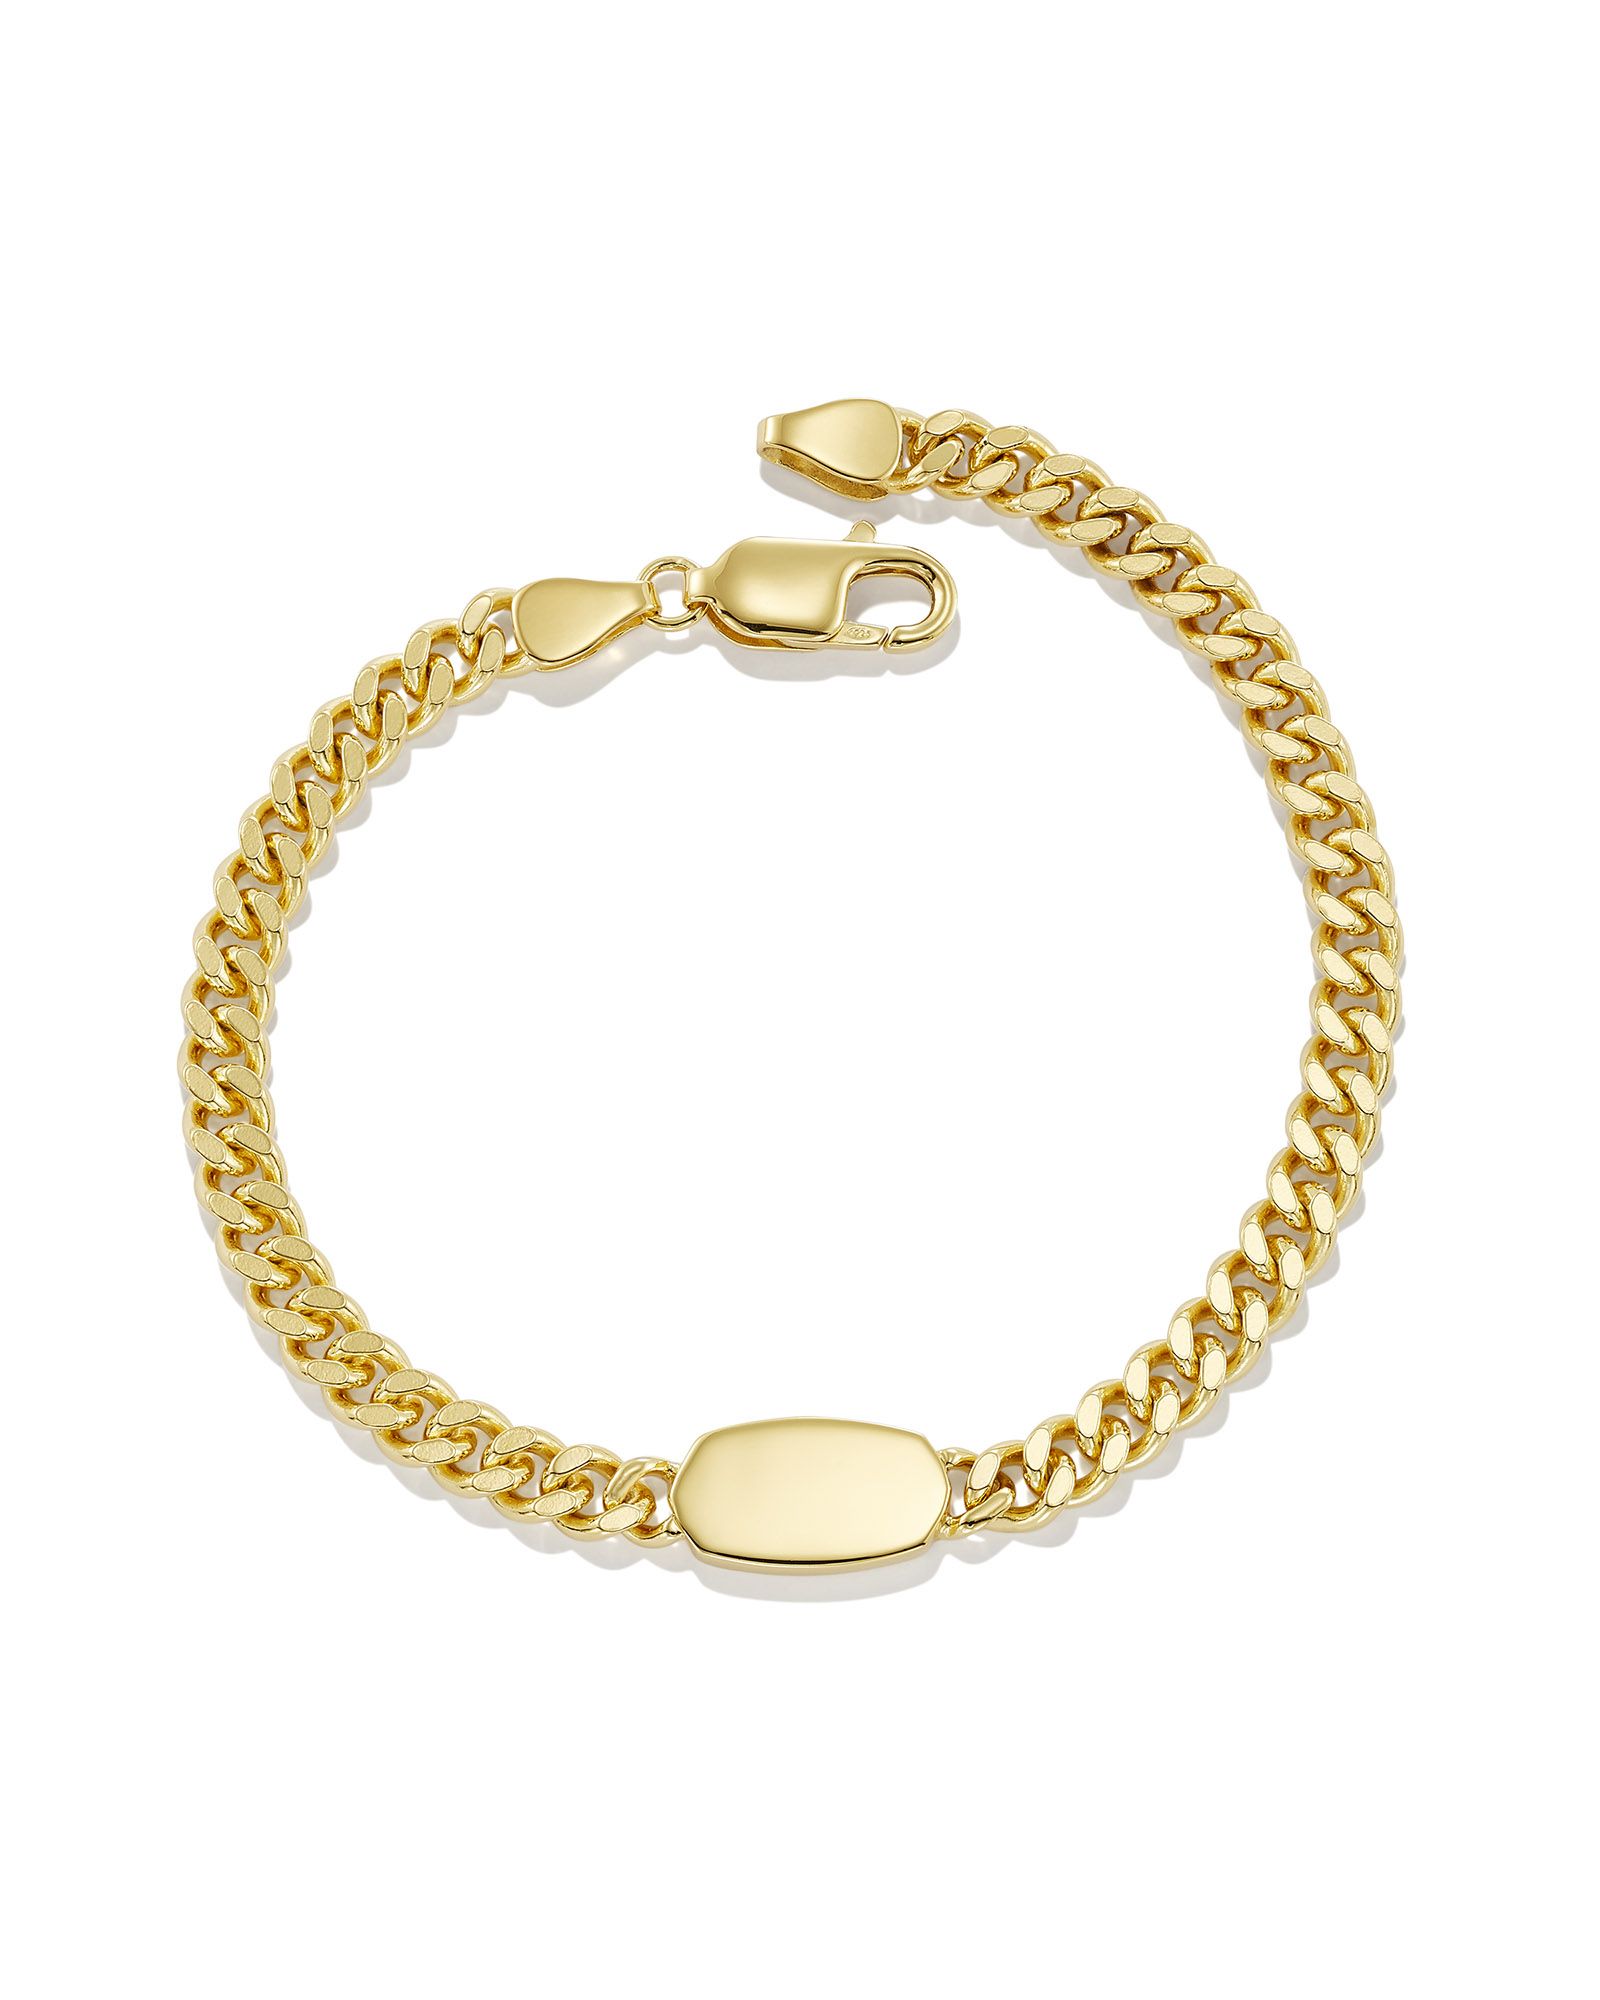 Elaina Curb Chain Bracelet in 18k Gold Vermeil | Kendra Scott | Kendra Scott